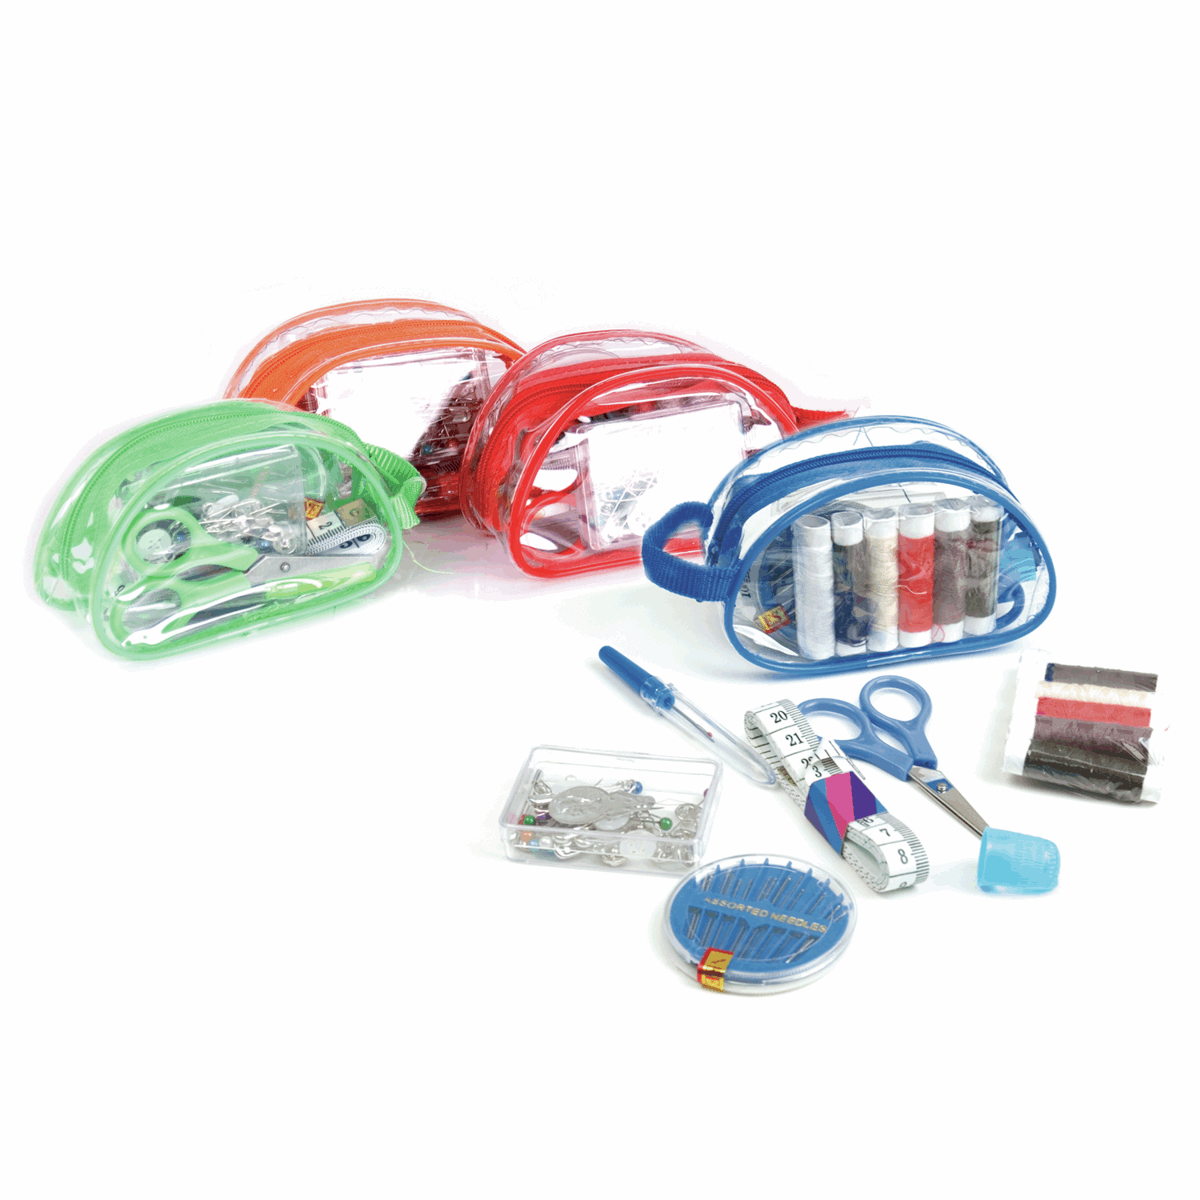 1 x Small Sew & Go Sewing Kit Scissors Tape Measure Thread Pins Thimble PVC Zipped Bag